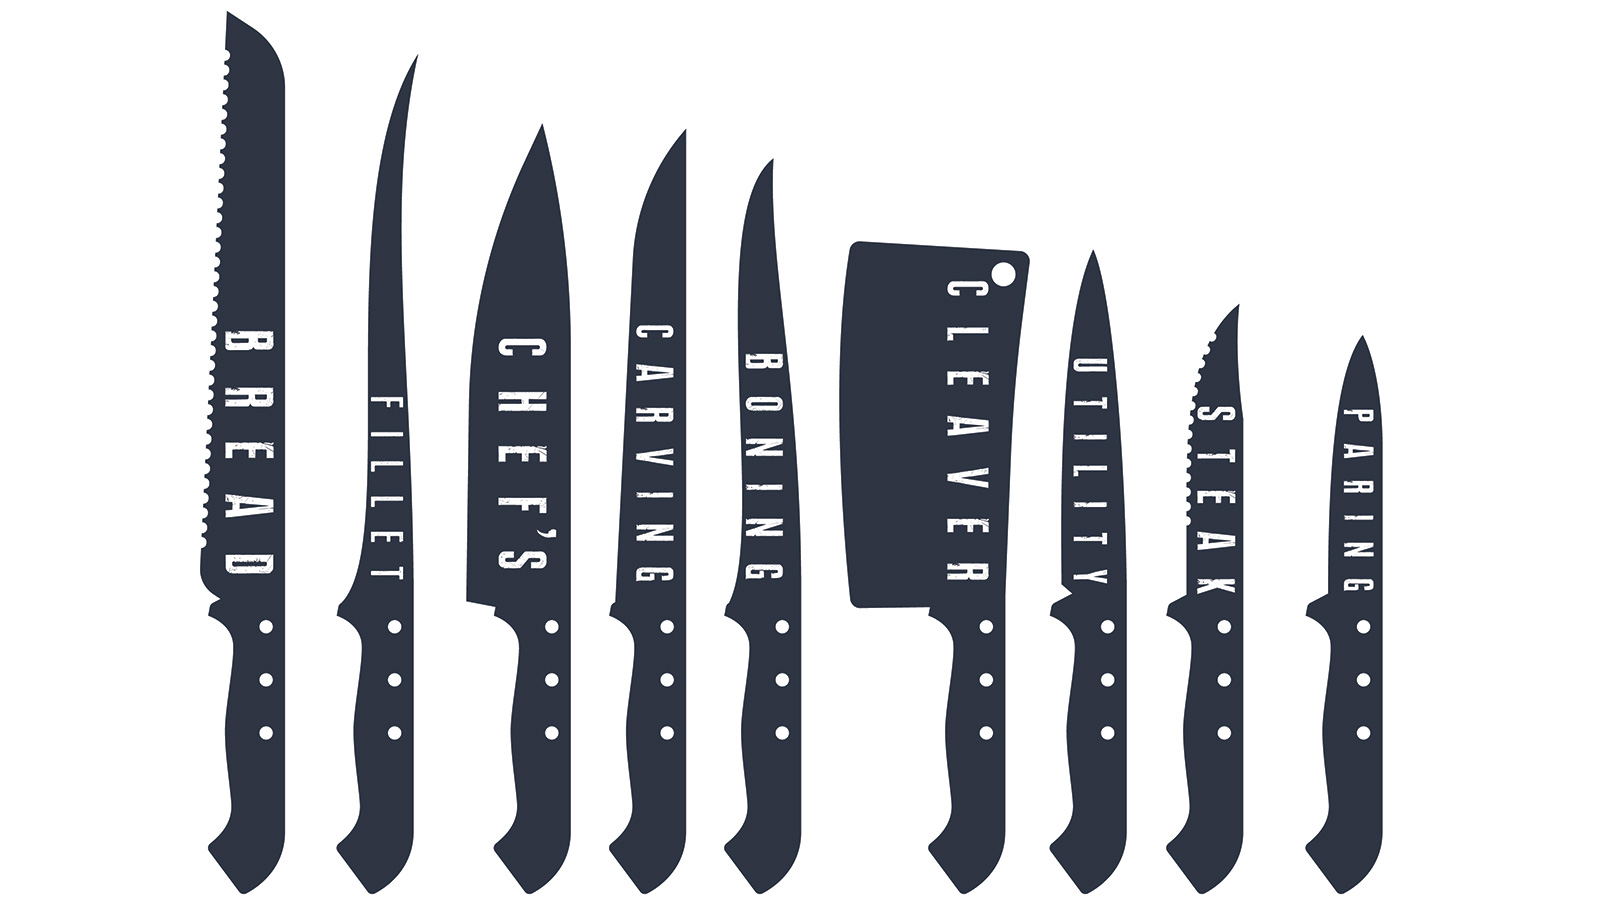 Knife Safety Handling - Online Culinary School (OCS)